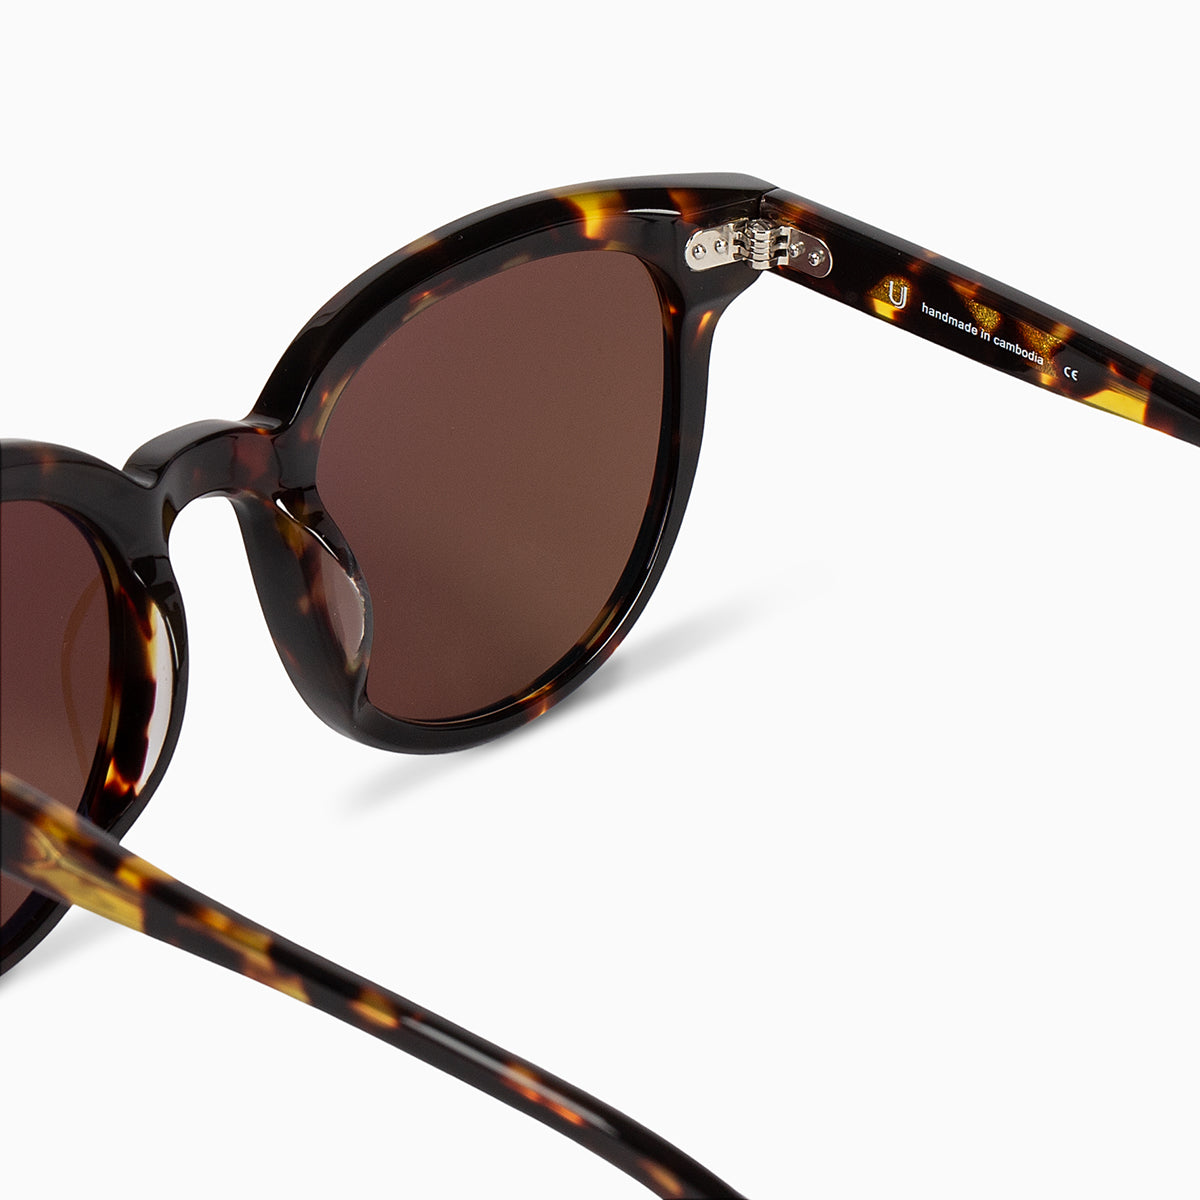 Classic Round Sunglasses in Dark Brown